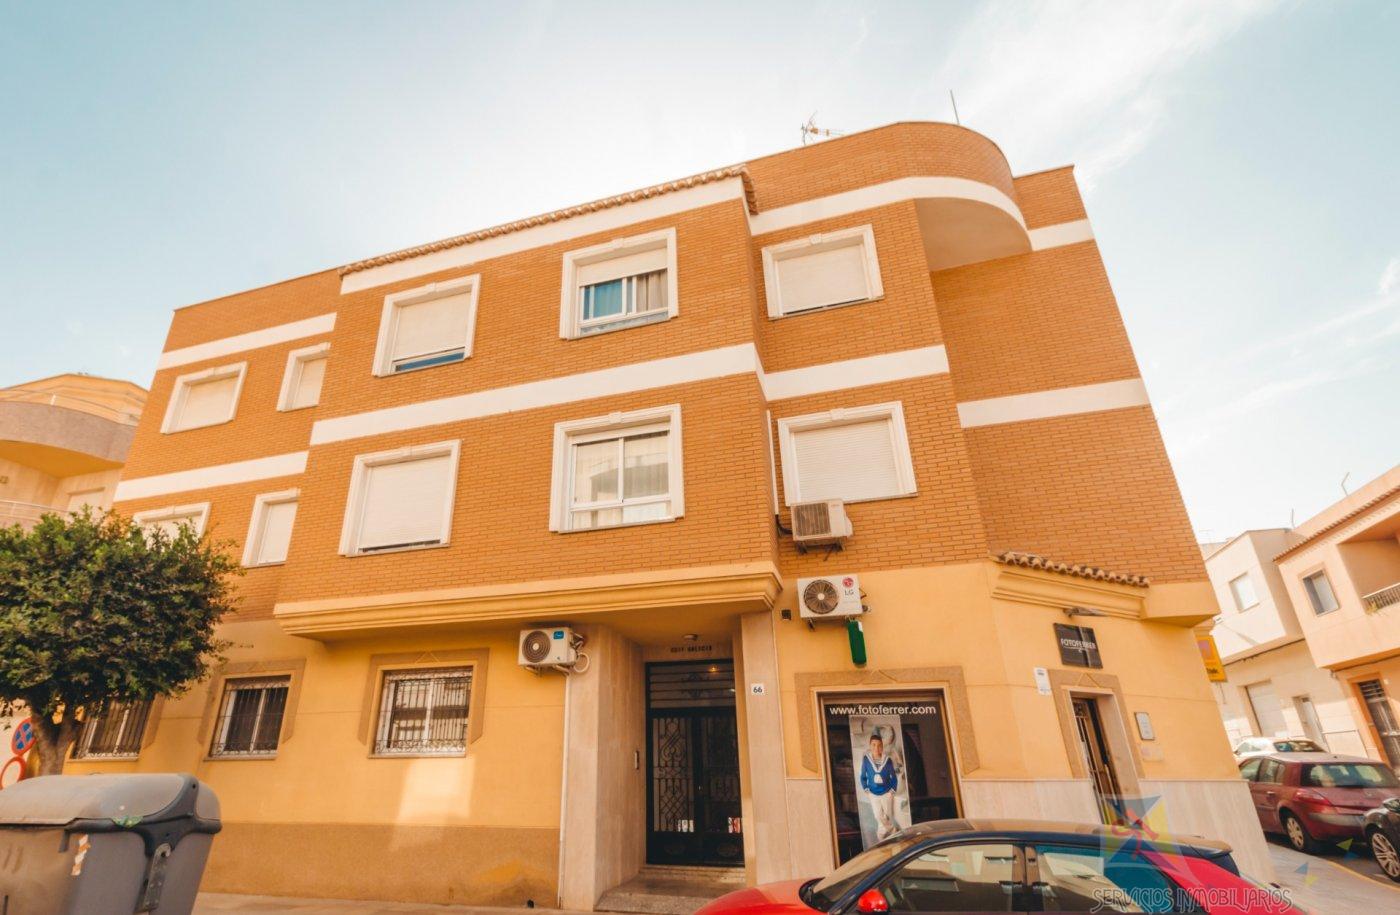 For sale of flat in El Ejido